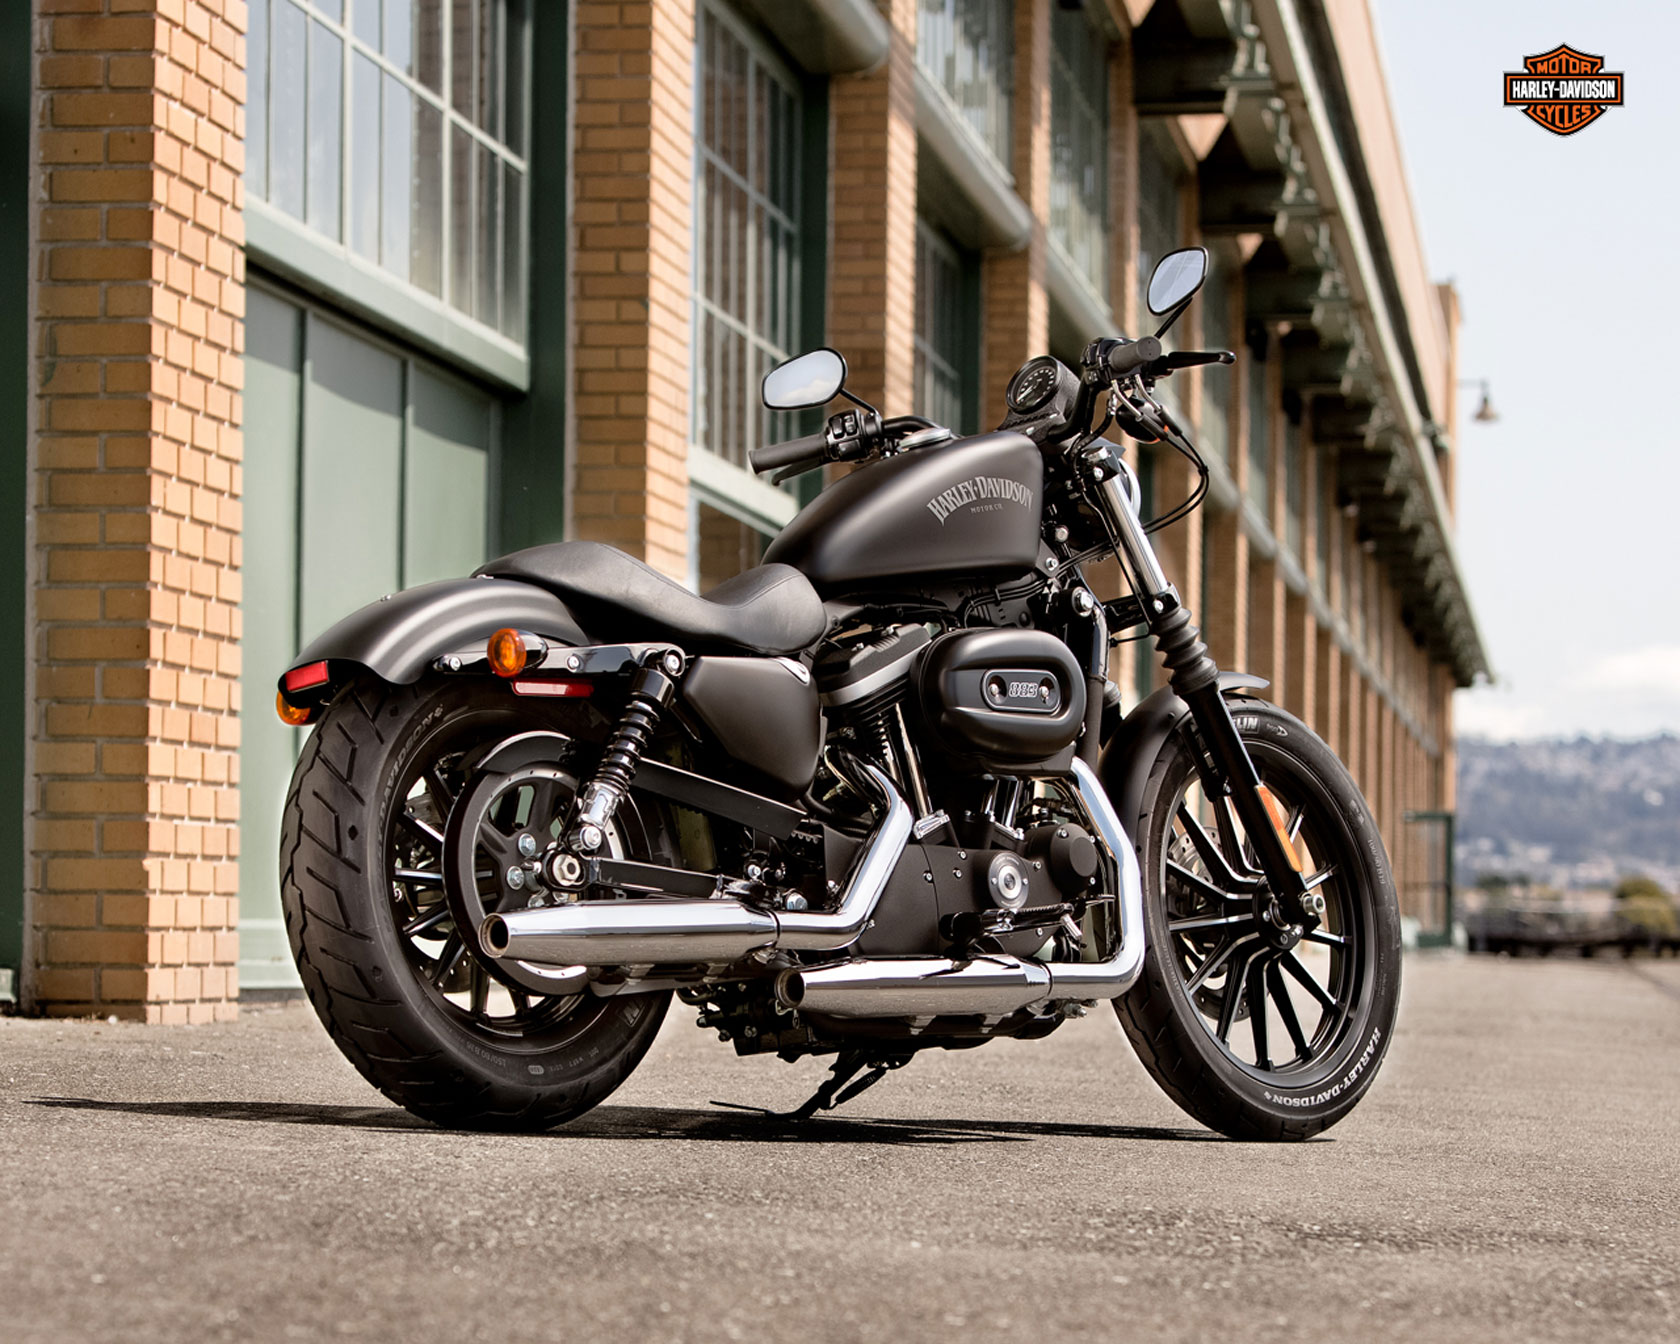 2013 Harley Davidson Xl883n Iron 883 Review